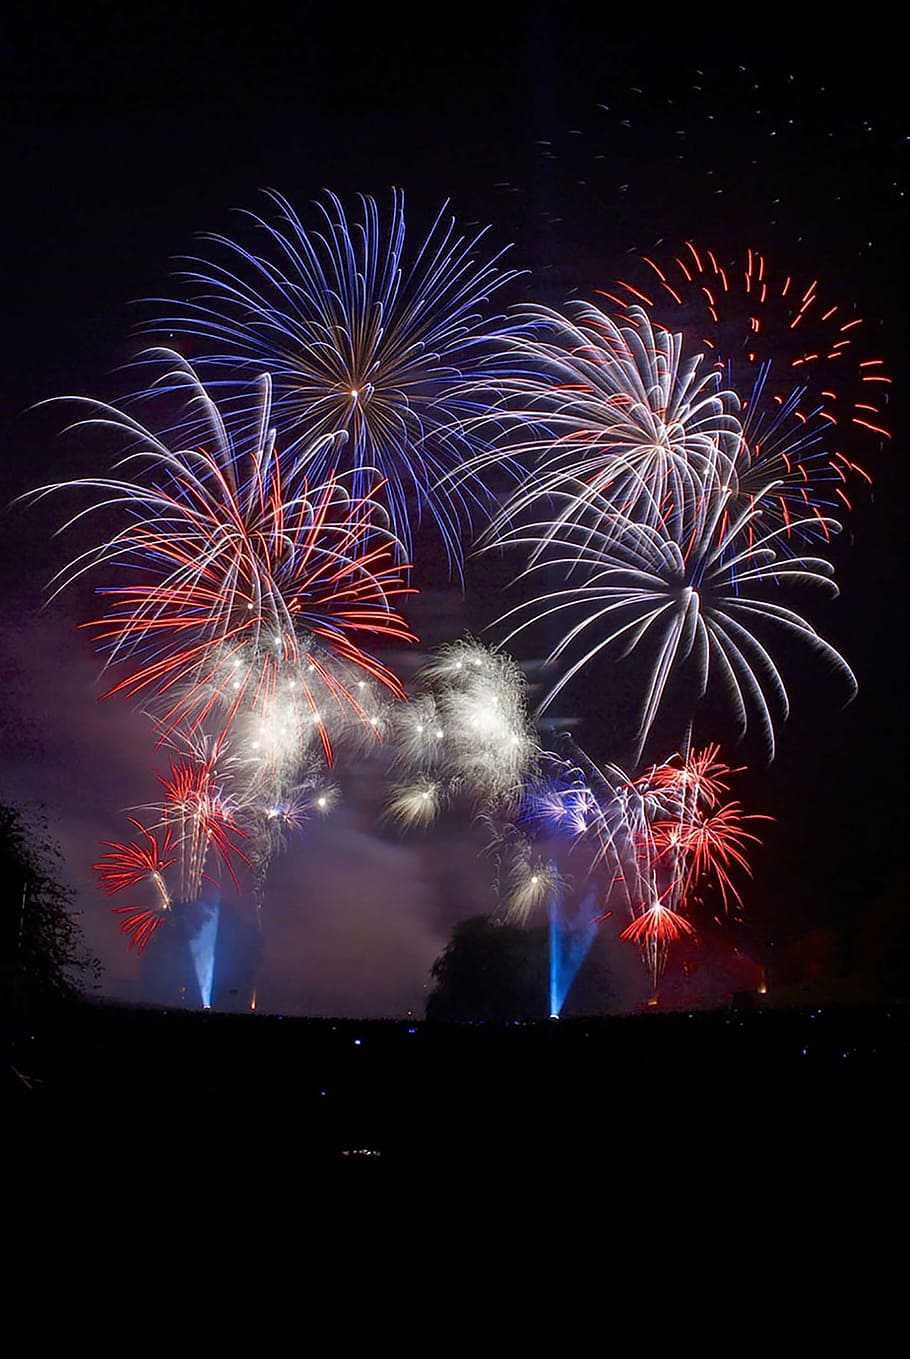 aerial, fireworks display, nighttime, fireworks, bonfire, night, burst, firework display, celebration, exploding